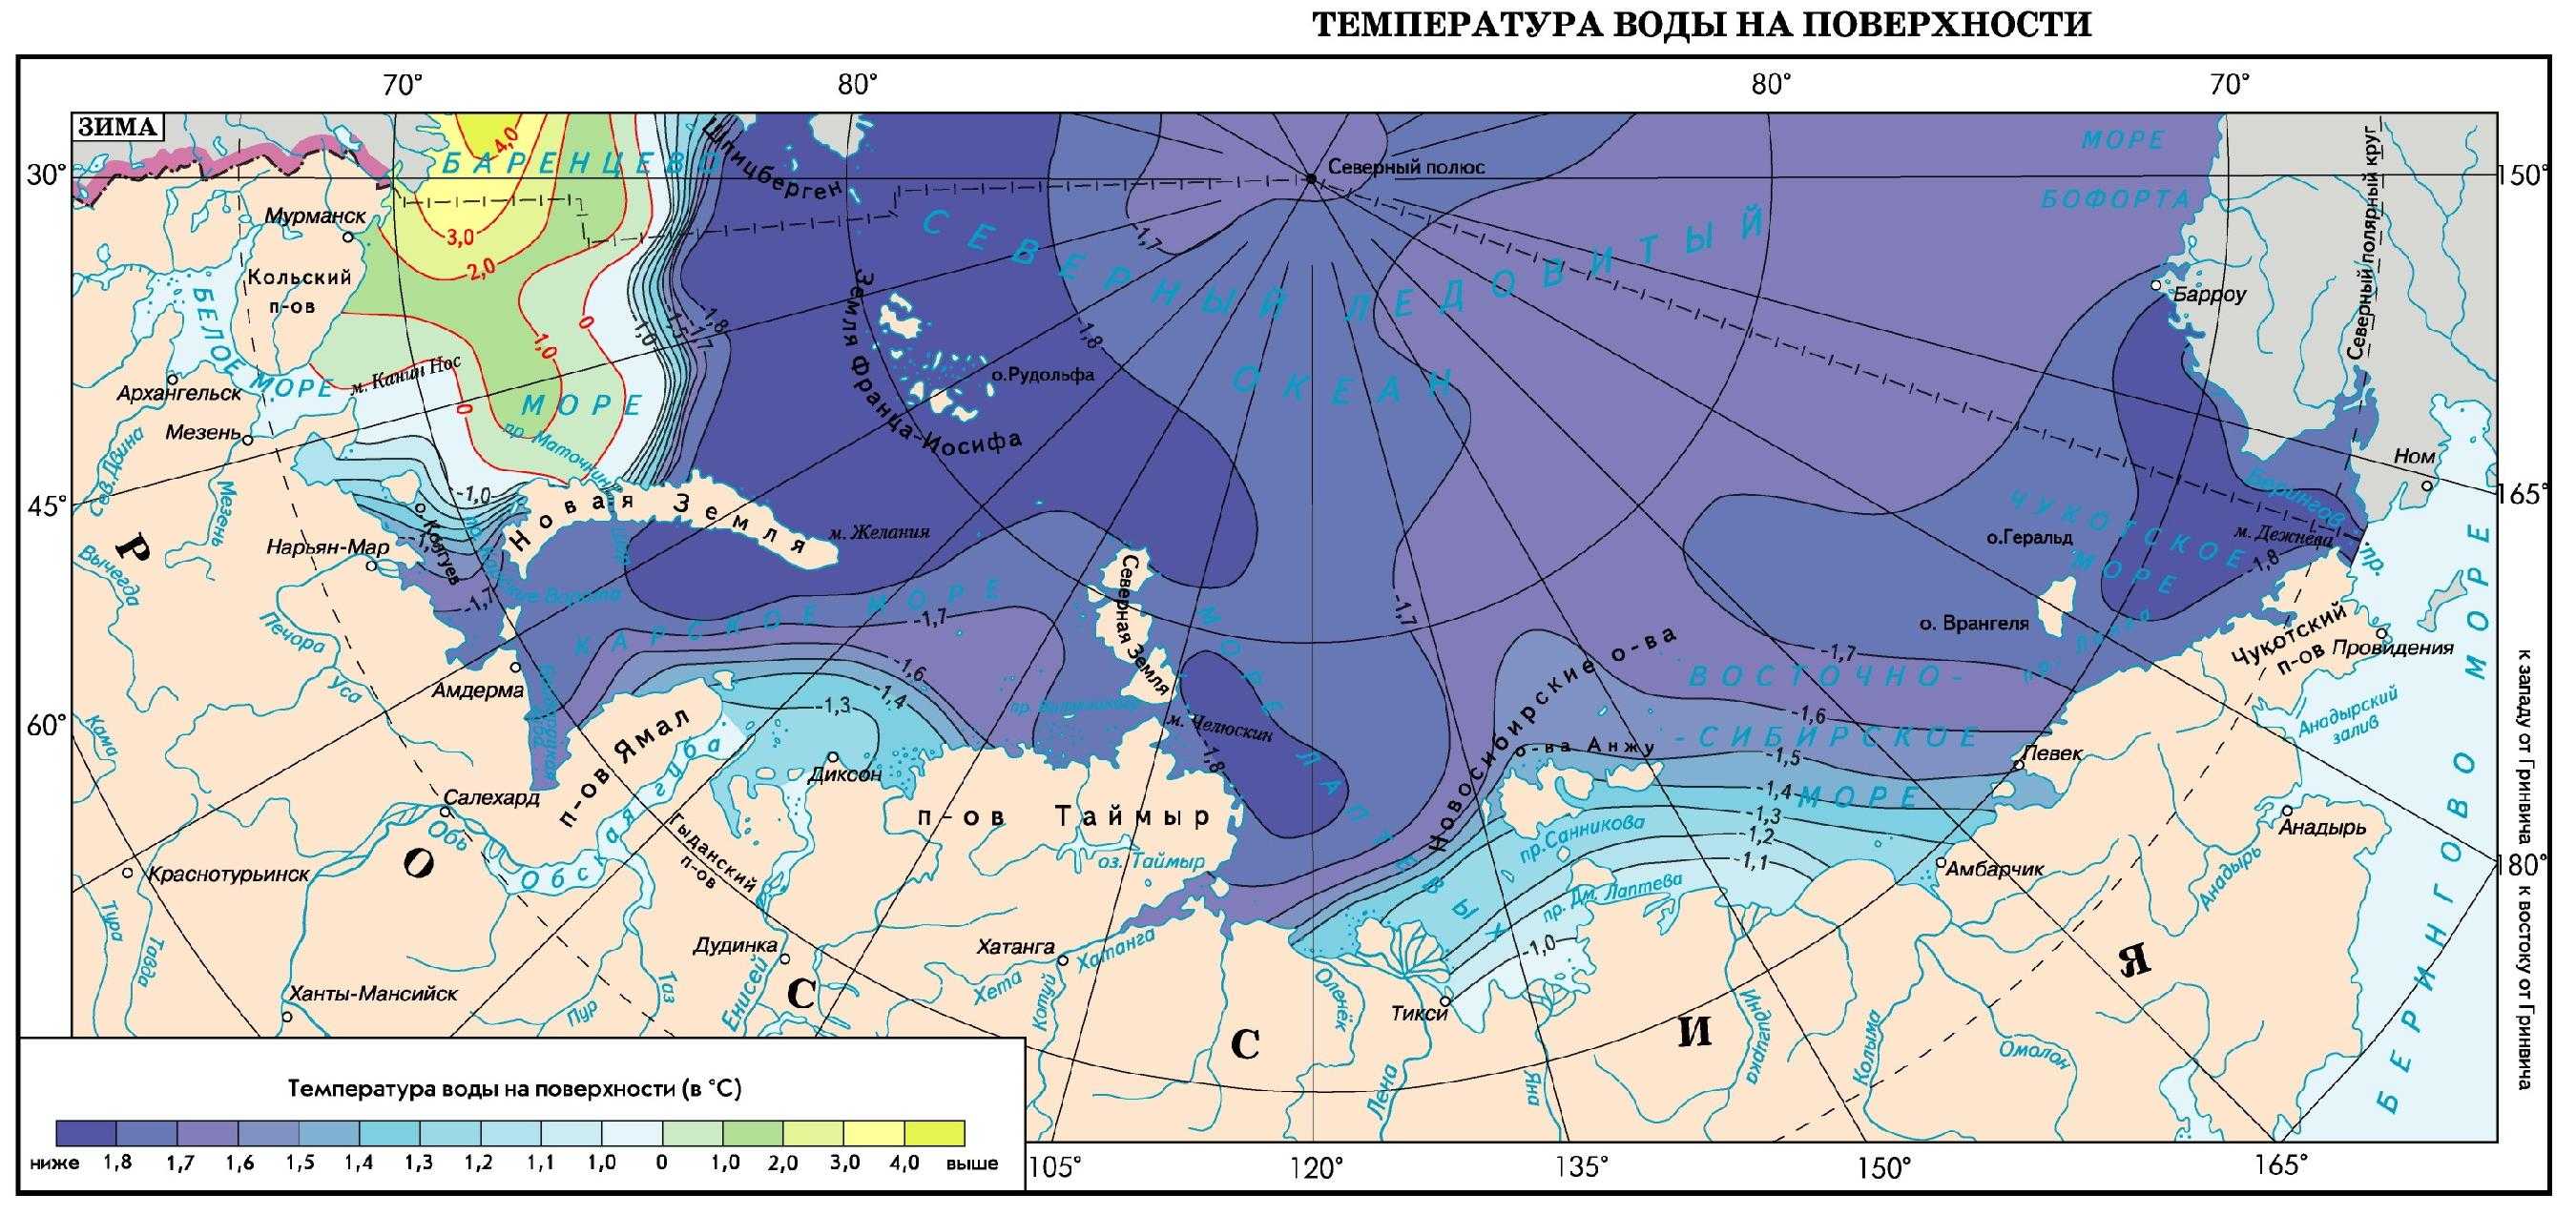 Бассейн карского моря океан. Карта климата Северного Ледовитого океана. Климатическая карта Северного Ледовитого океана. Климатические пояса Северного Ледовитого океана. Климатические пояса Северного Ледовитого океана карта.